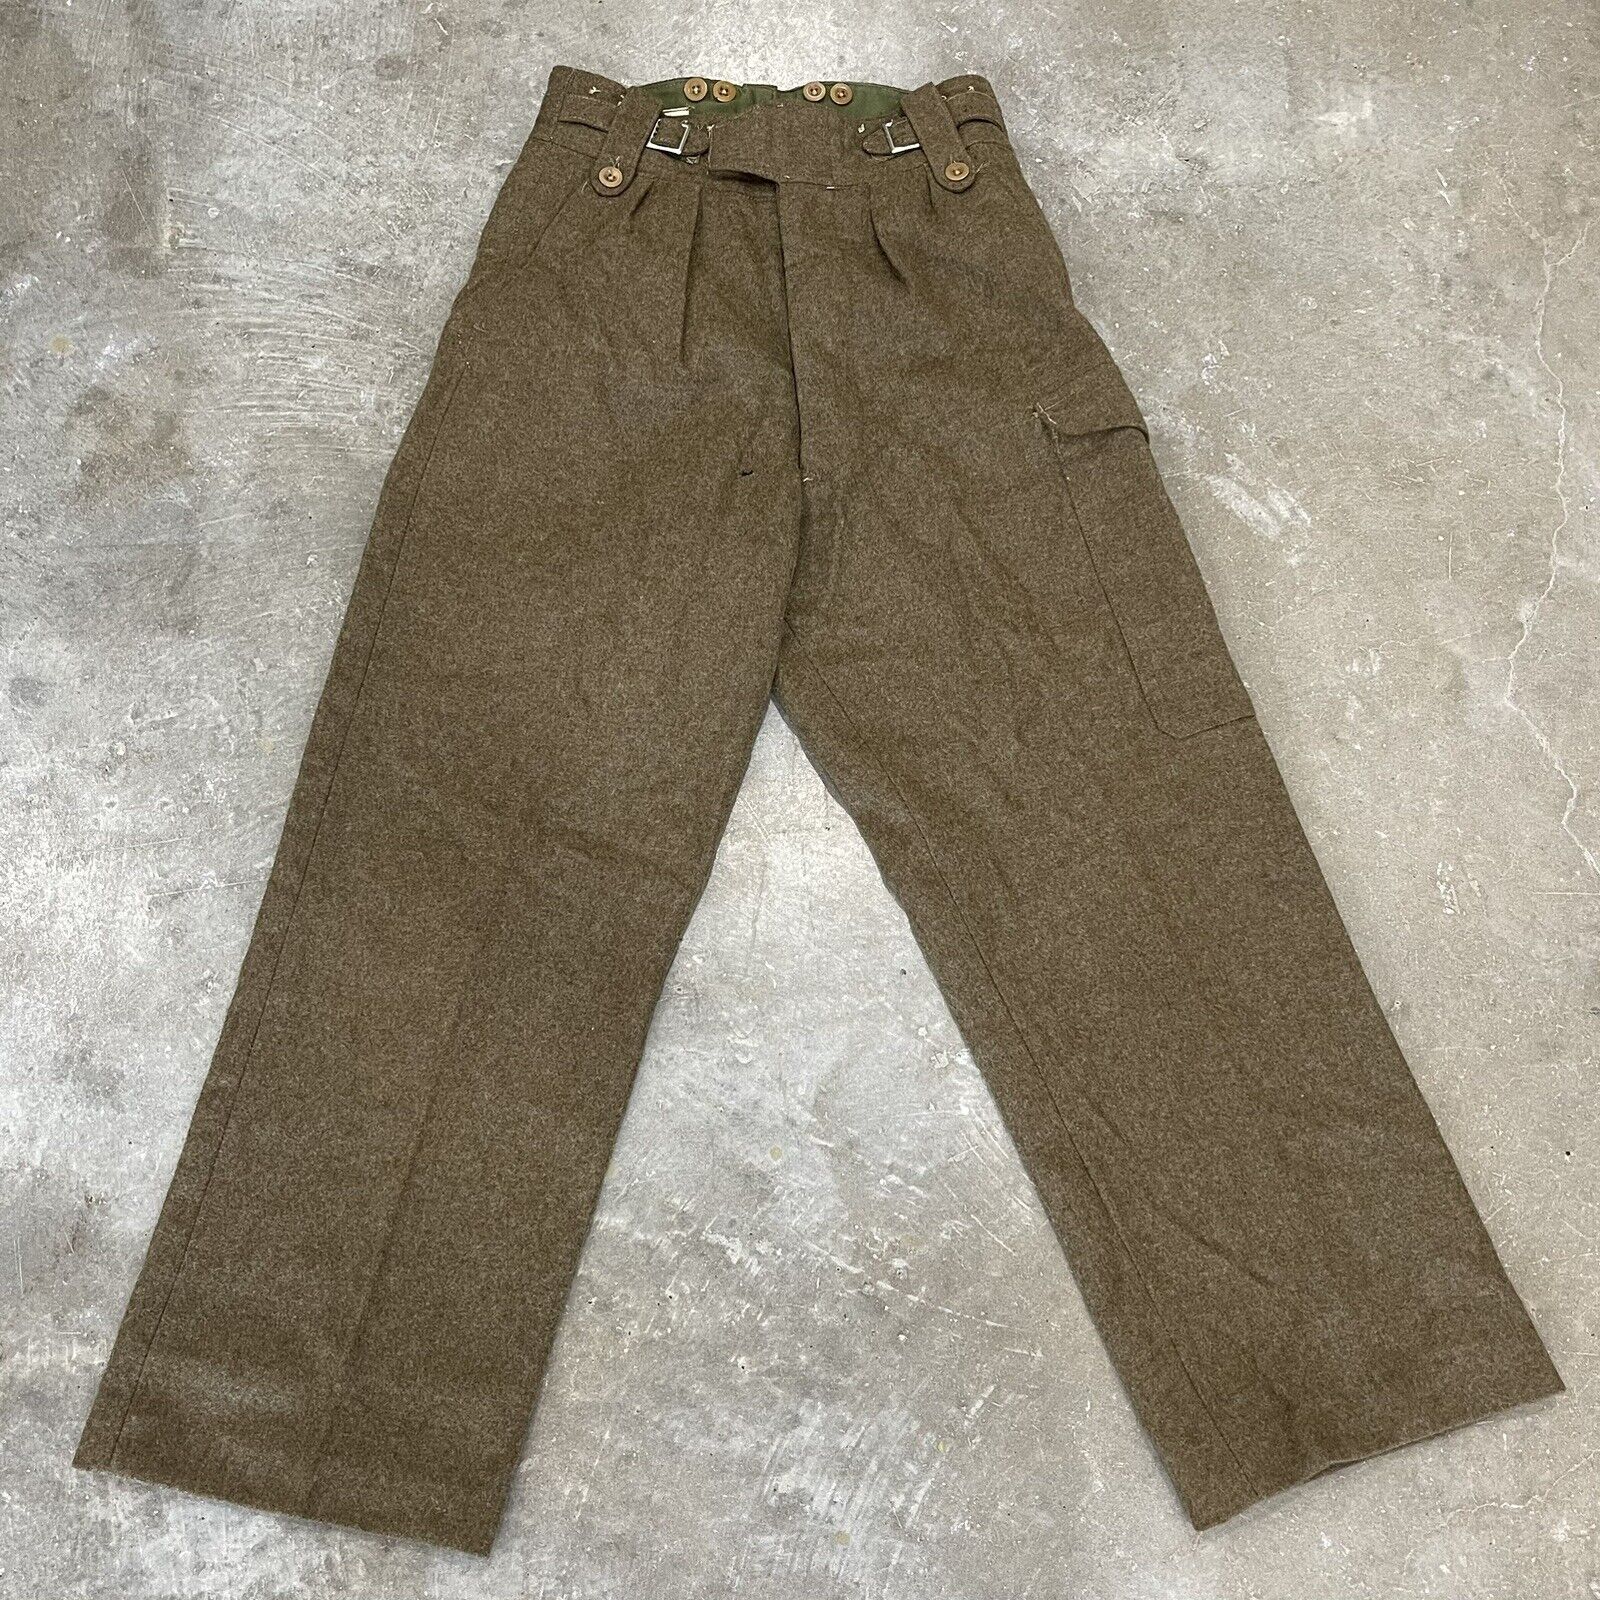 Vintage Post WW2 Battledress  1949 Pattern Wool Military Trousers Size 10 30x29